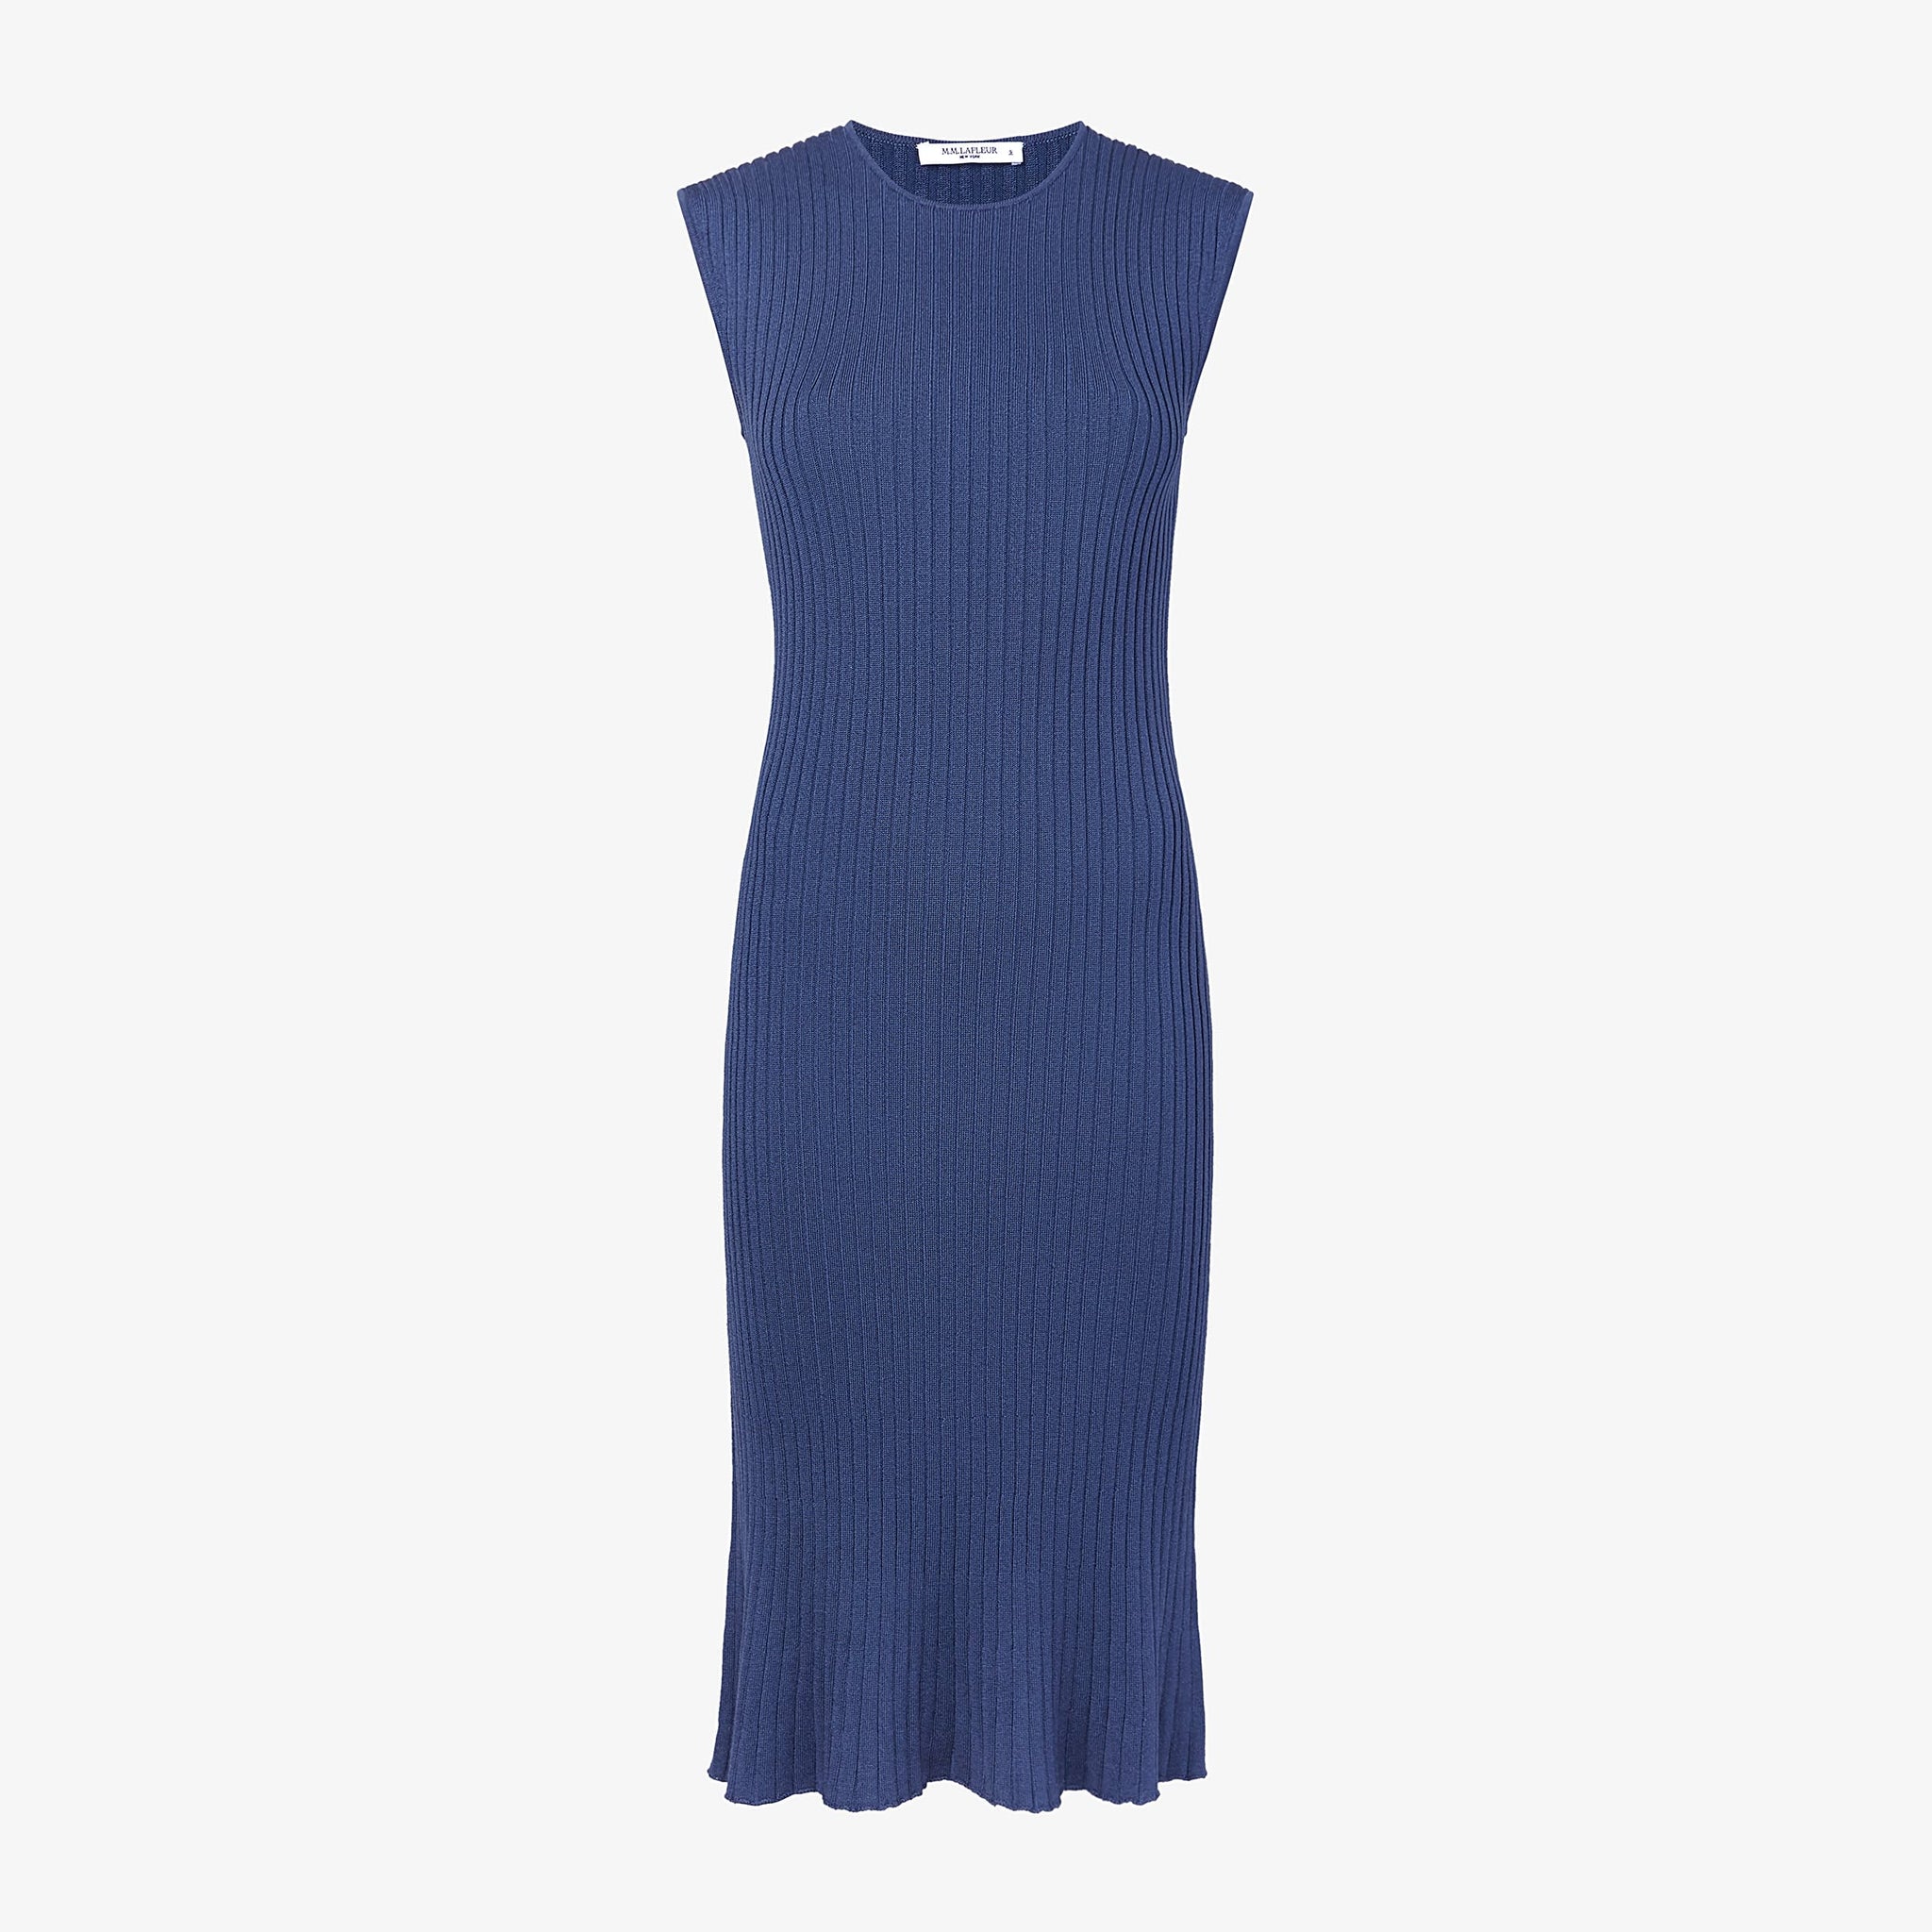 packshot image of the Dylan Dress—Slinky Knit in Adriatic Blue